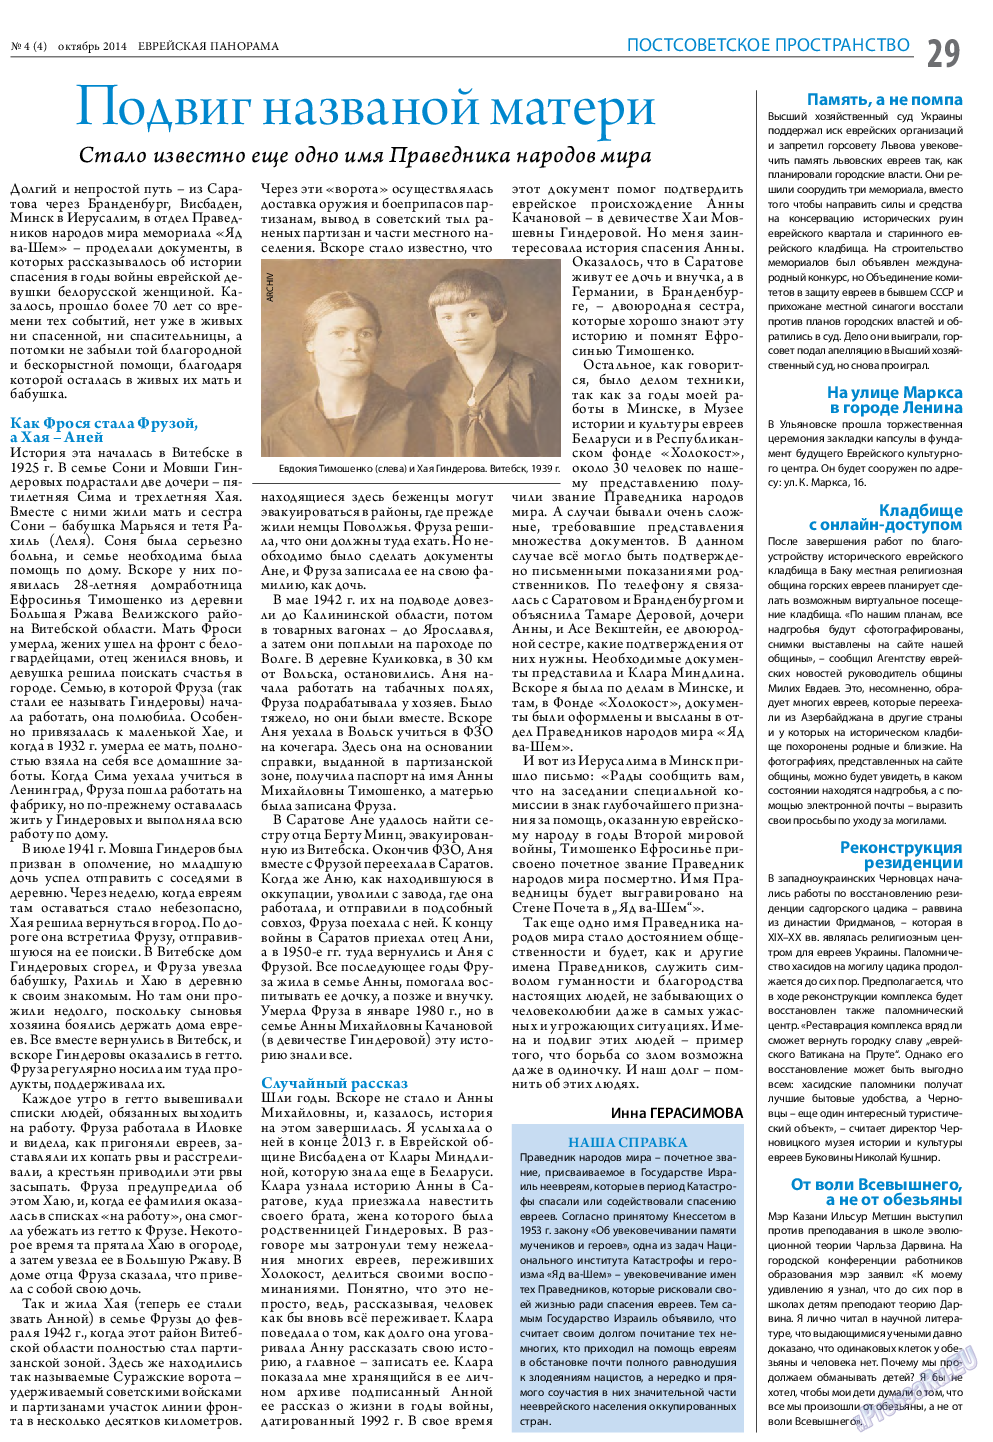 Еврейская панорама, газета. 2014 №4 стр.29